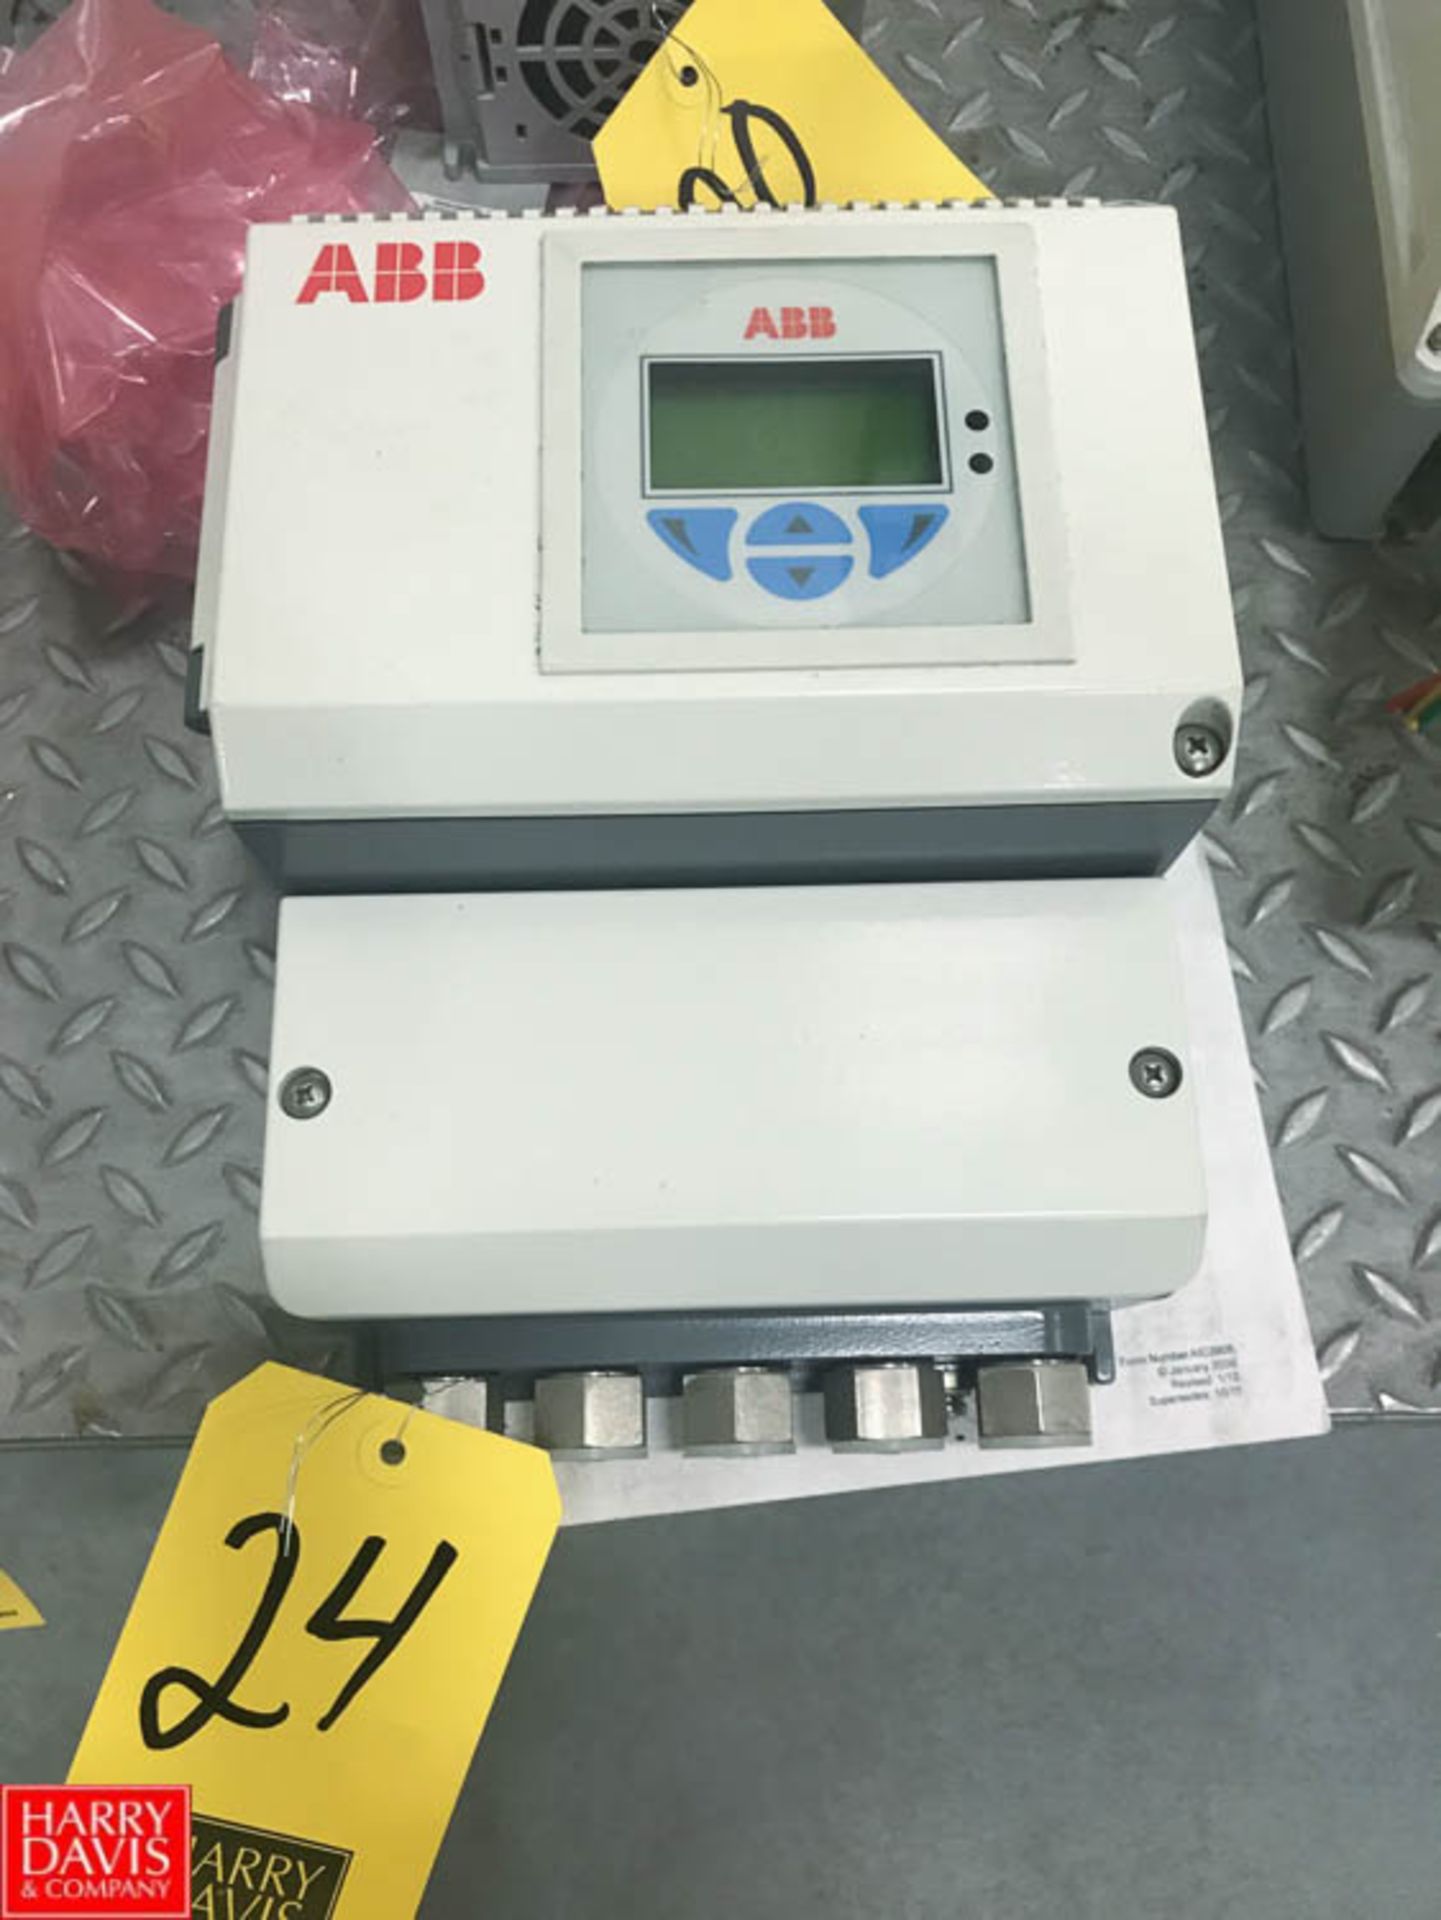 New ABB Flow Meter Controller Model FET321-1A0A183C1 Rigging Fee: $ 30